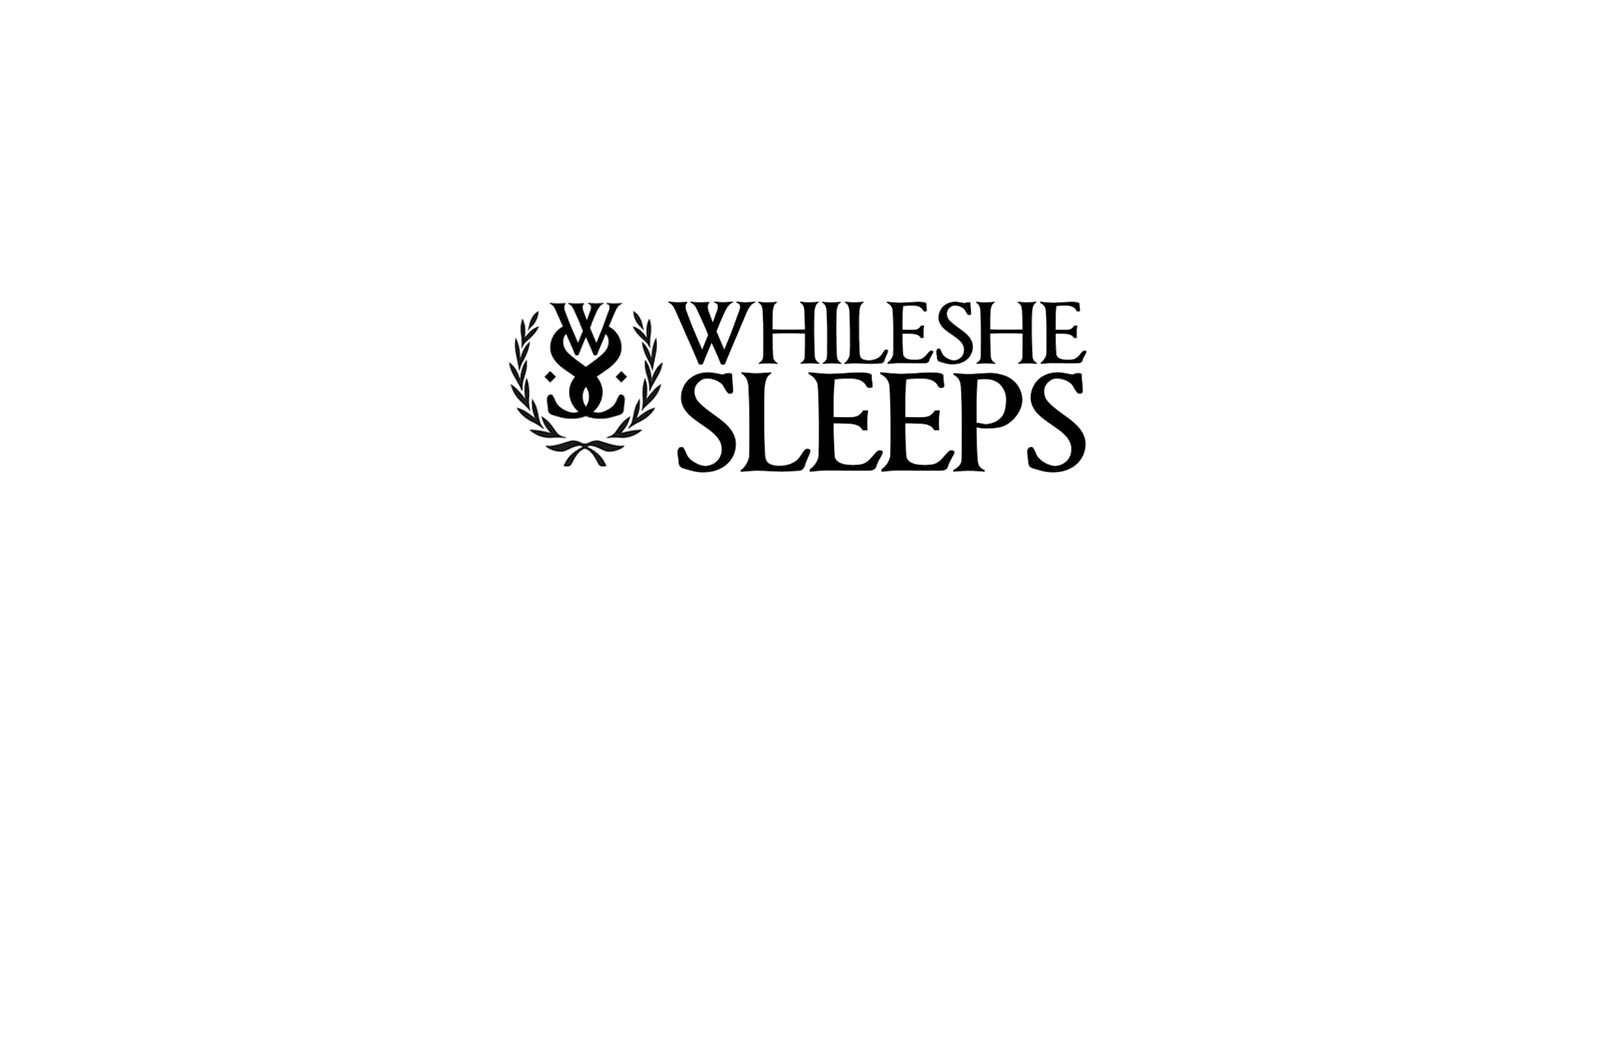 While She Sleeps Music Band Simple Wallpaper